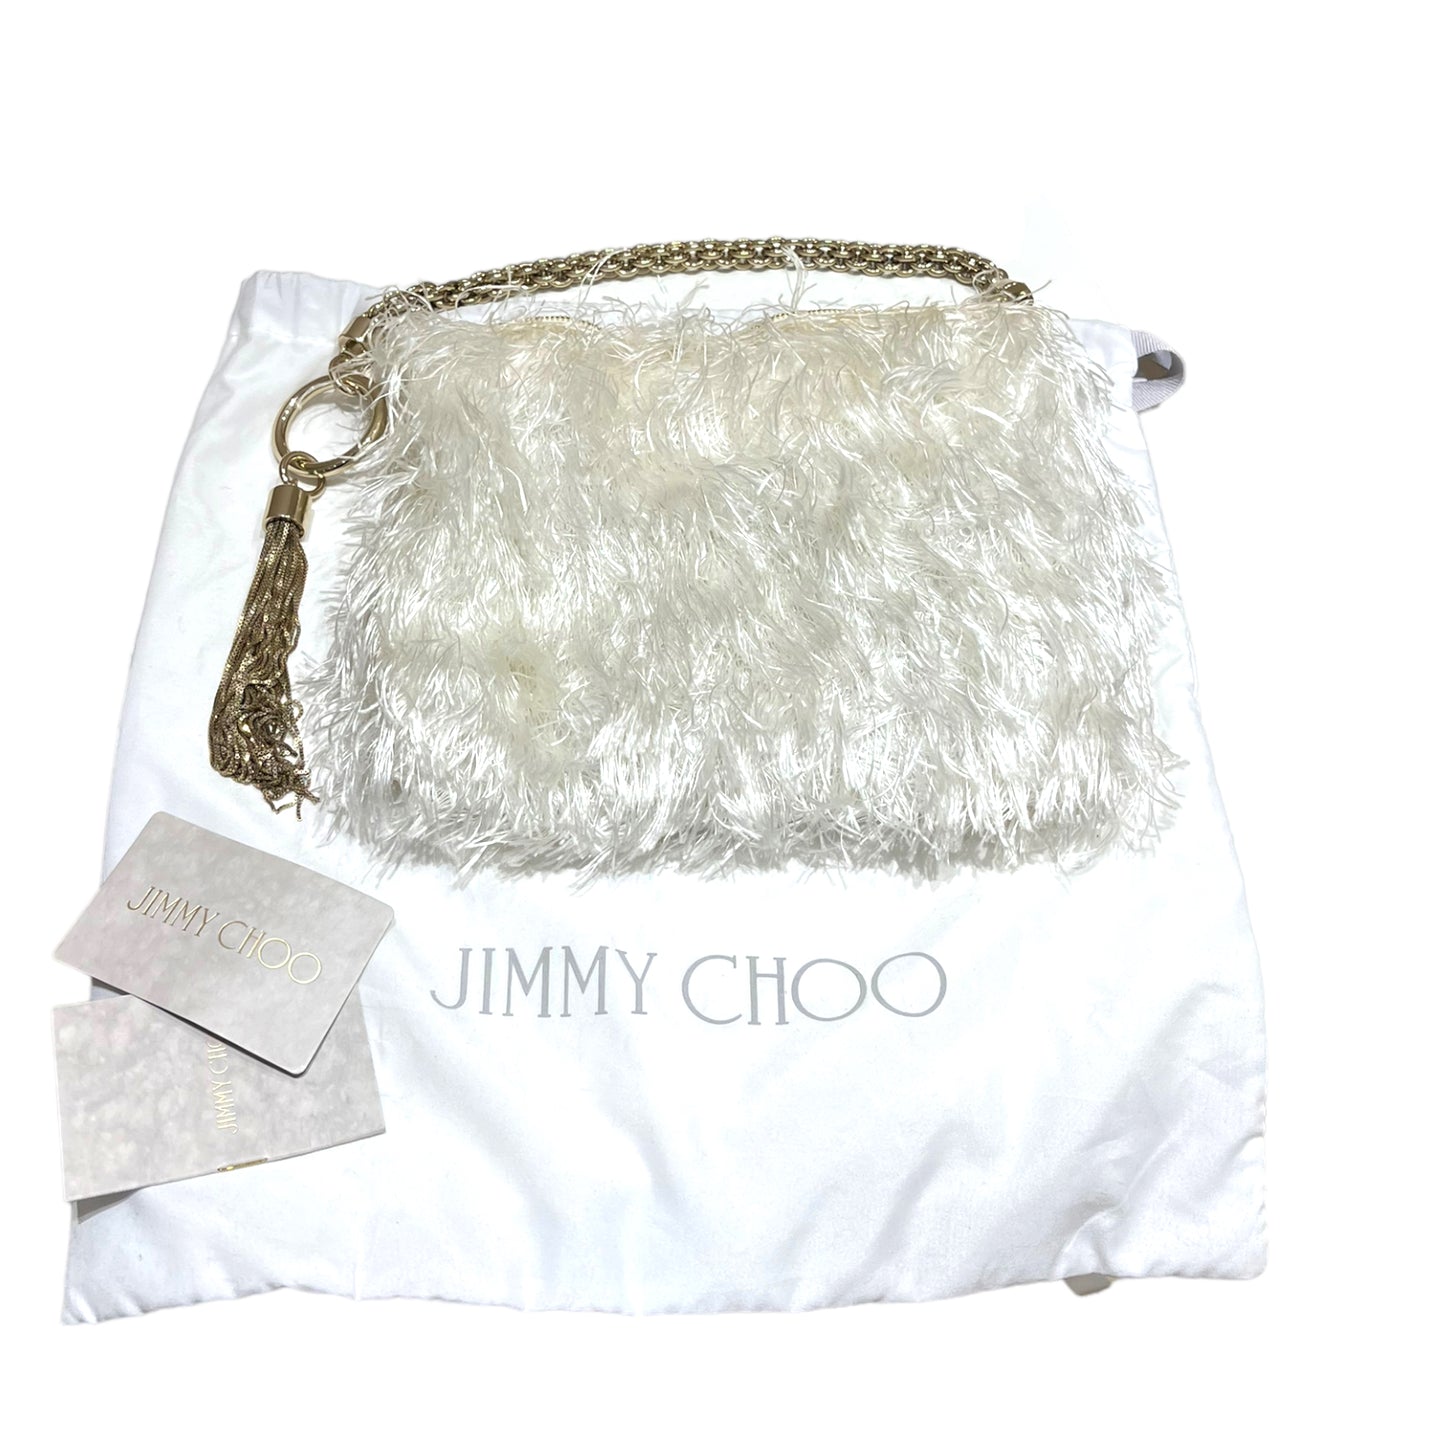 Jimmy Choo White Feather Clutch